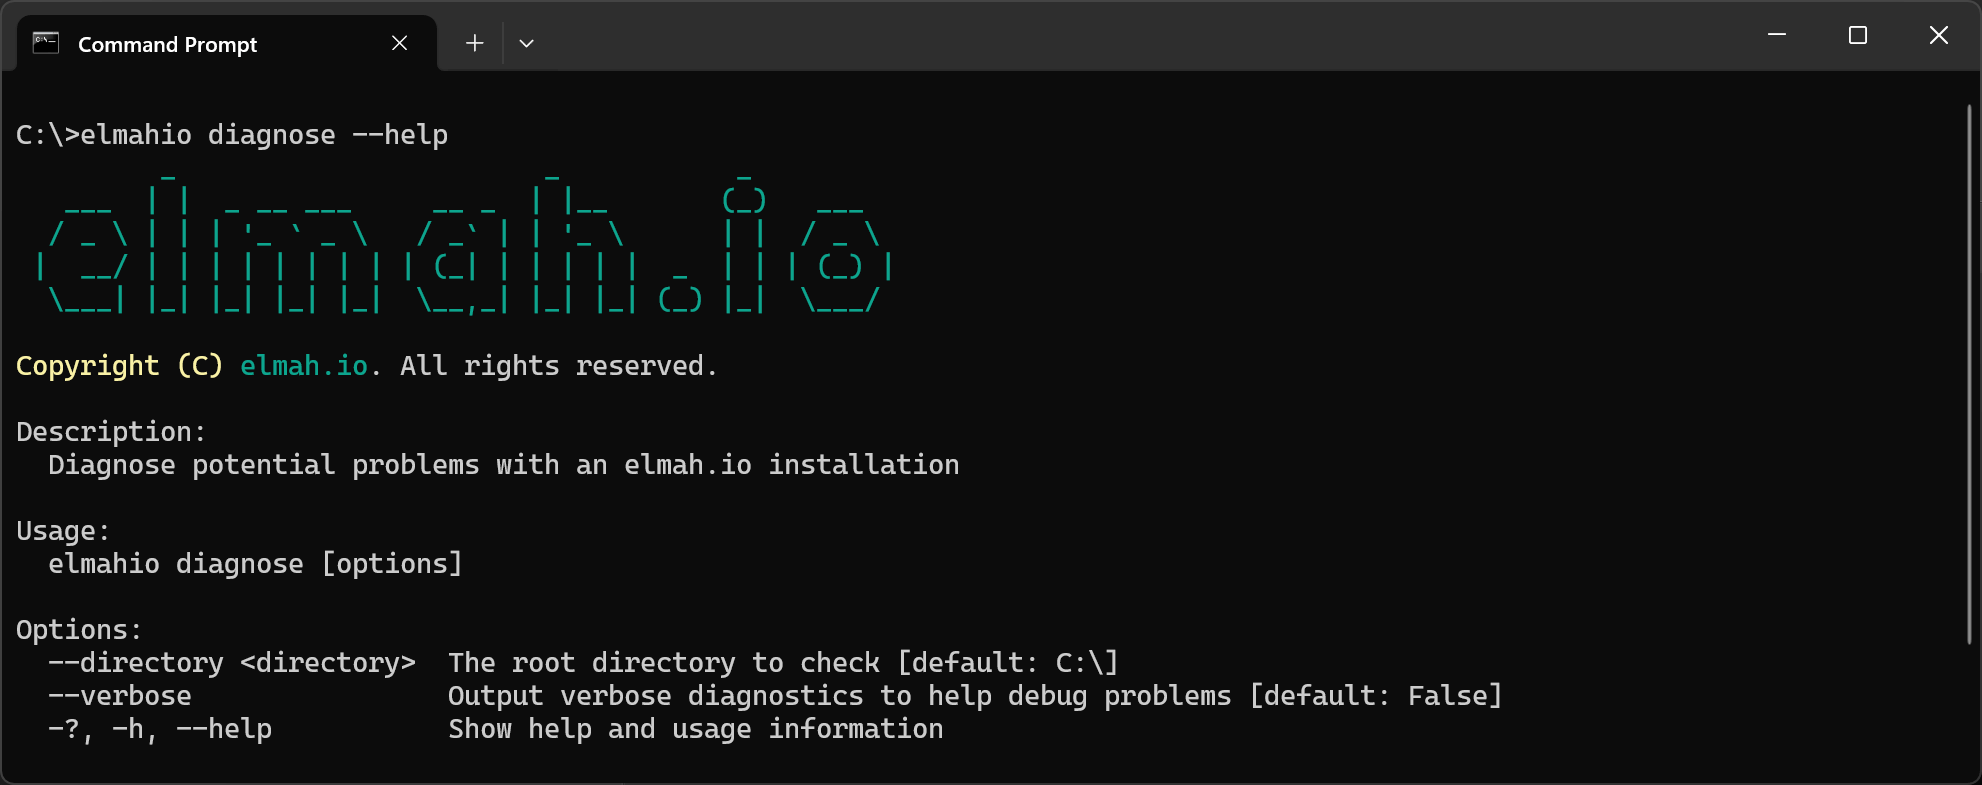 "Secret" elmah.io features #3 - Automate tasks with elmah.io CLI